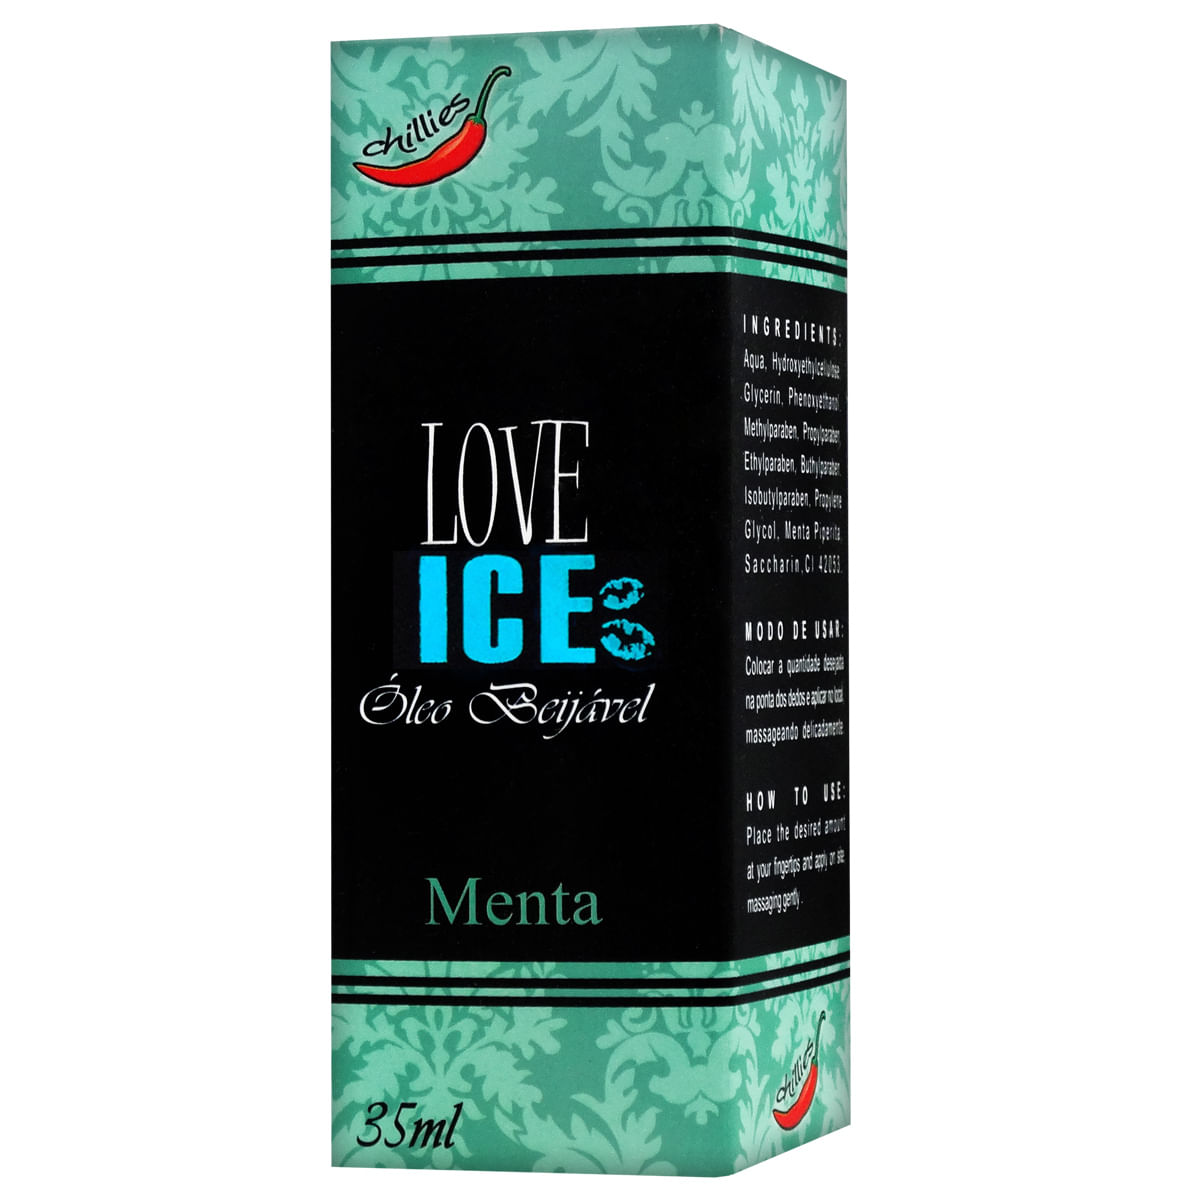 Love Ice Óleo Beijável de Menta 35ml Chillies